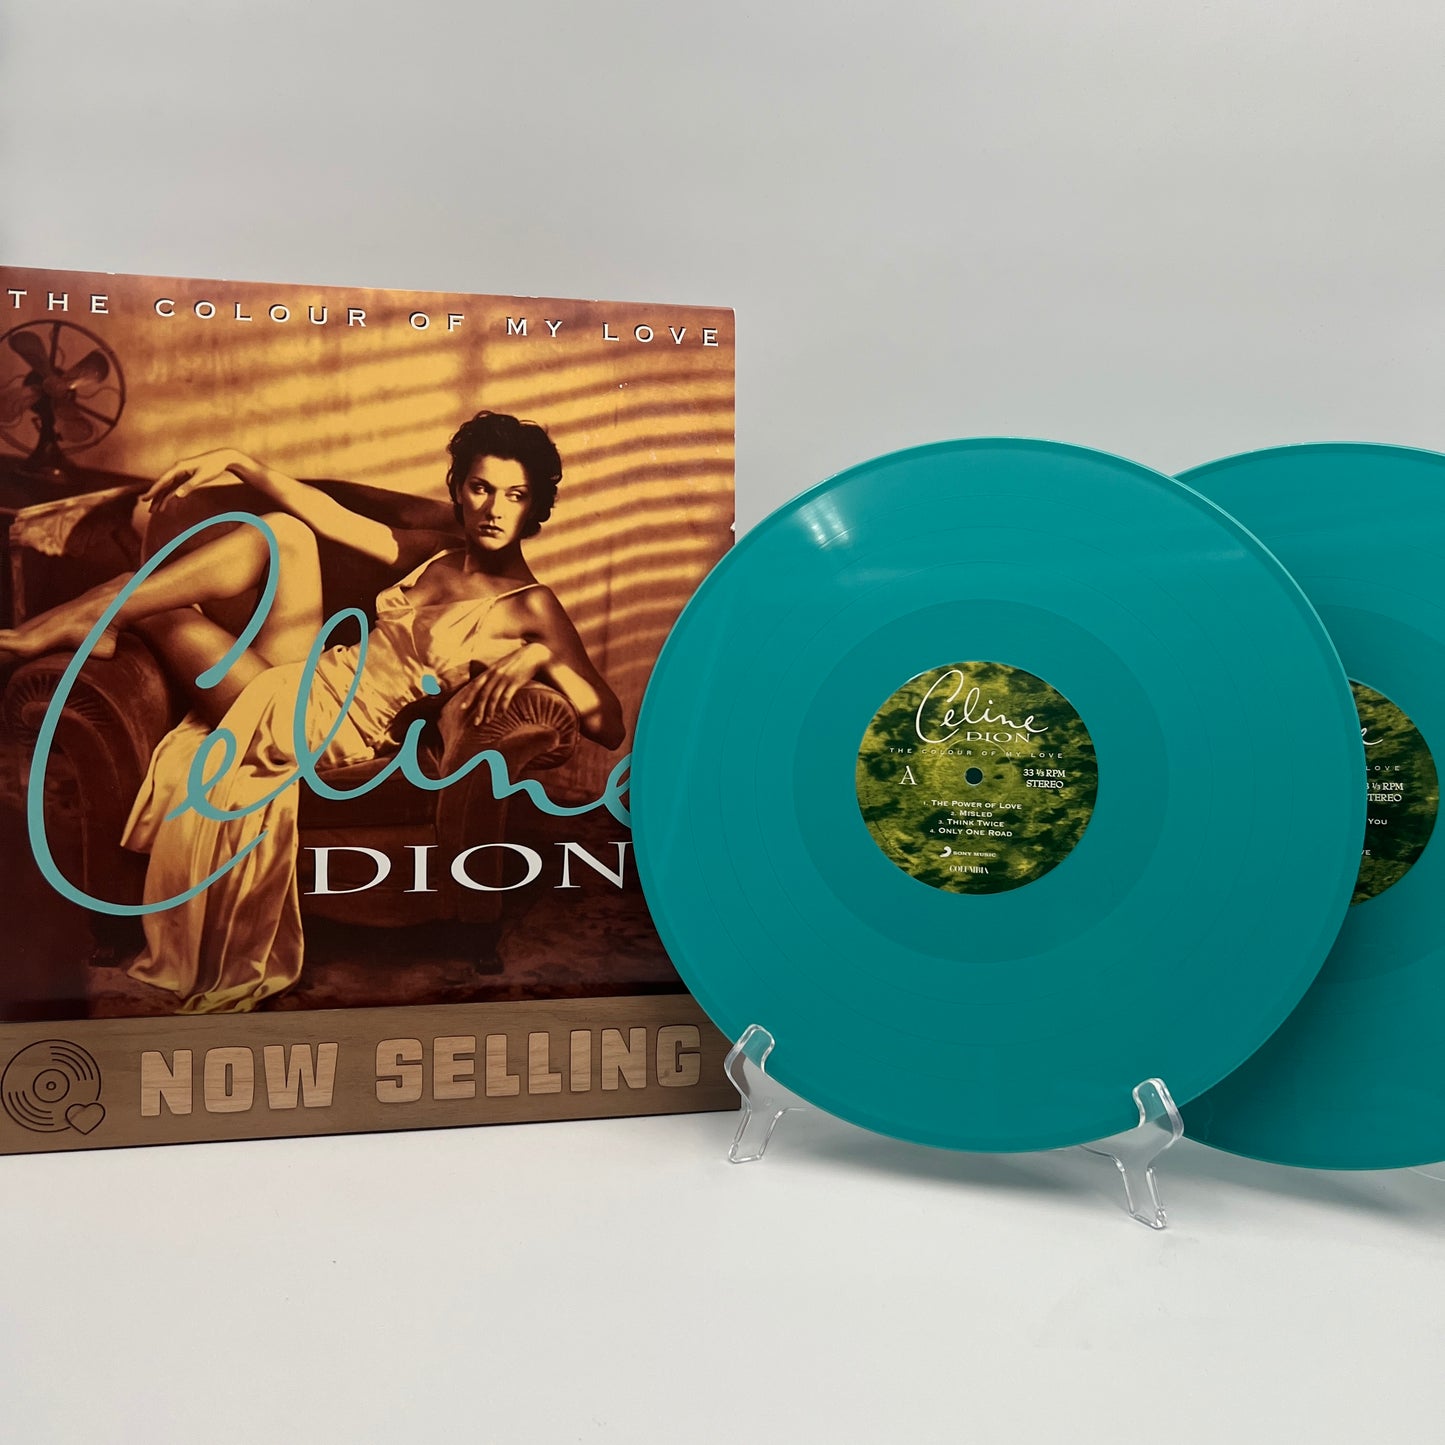 Celine Dion - The Colour Of My Love Vinyl LP Turquoise